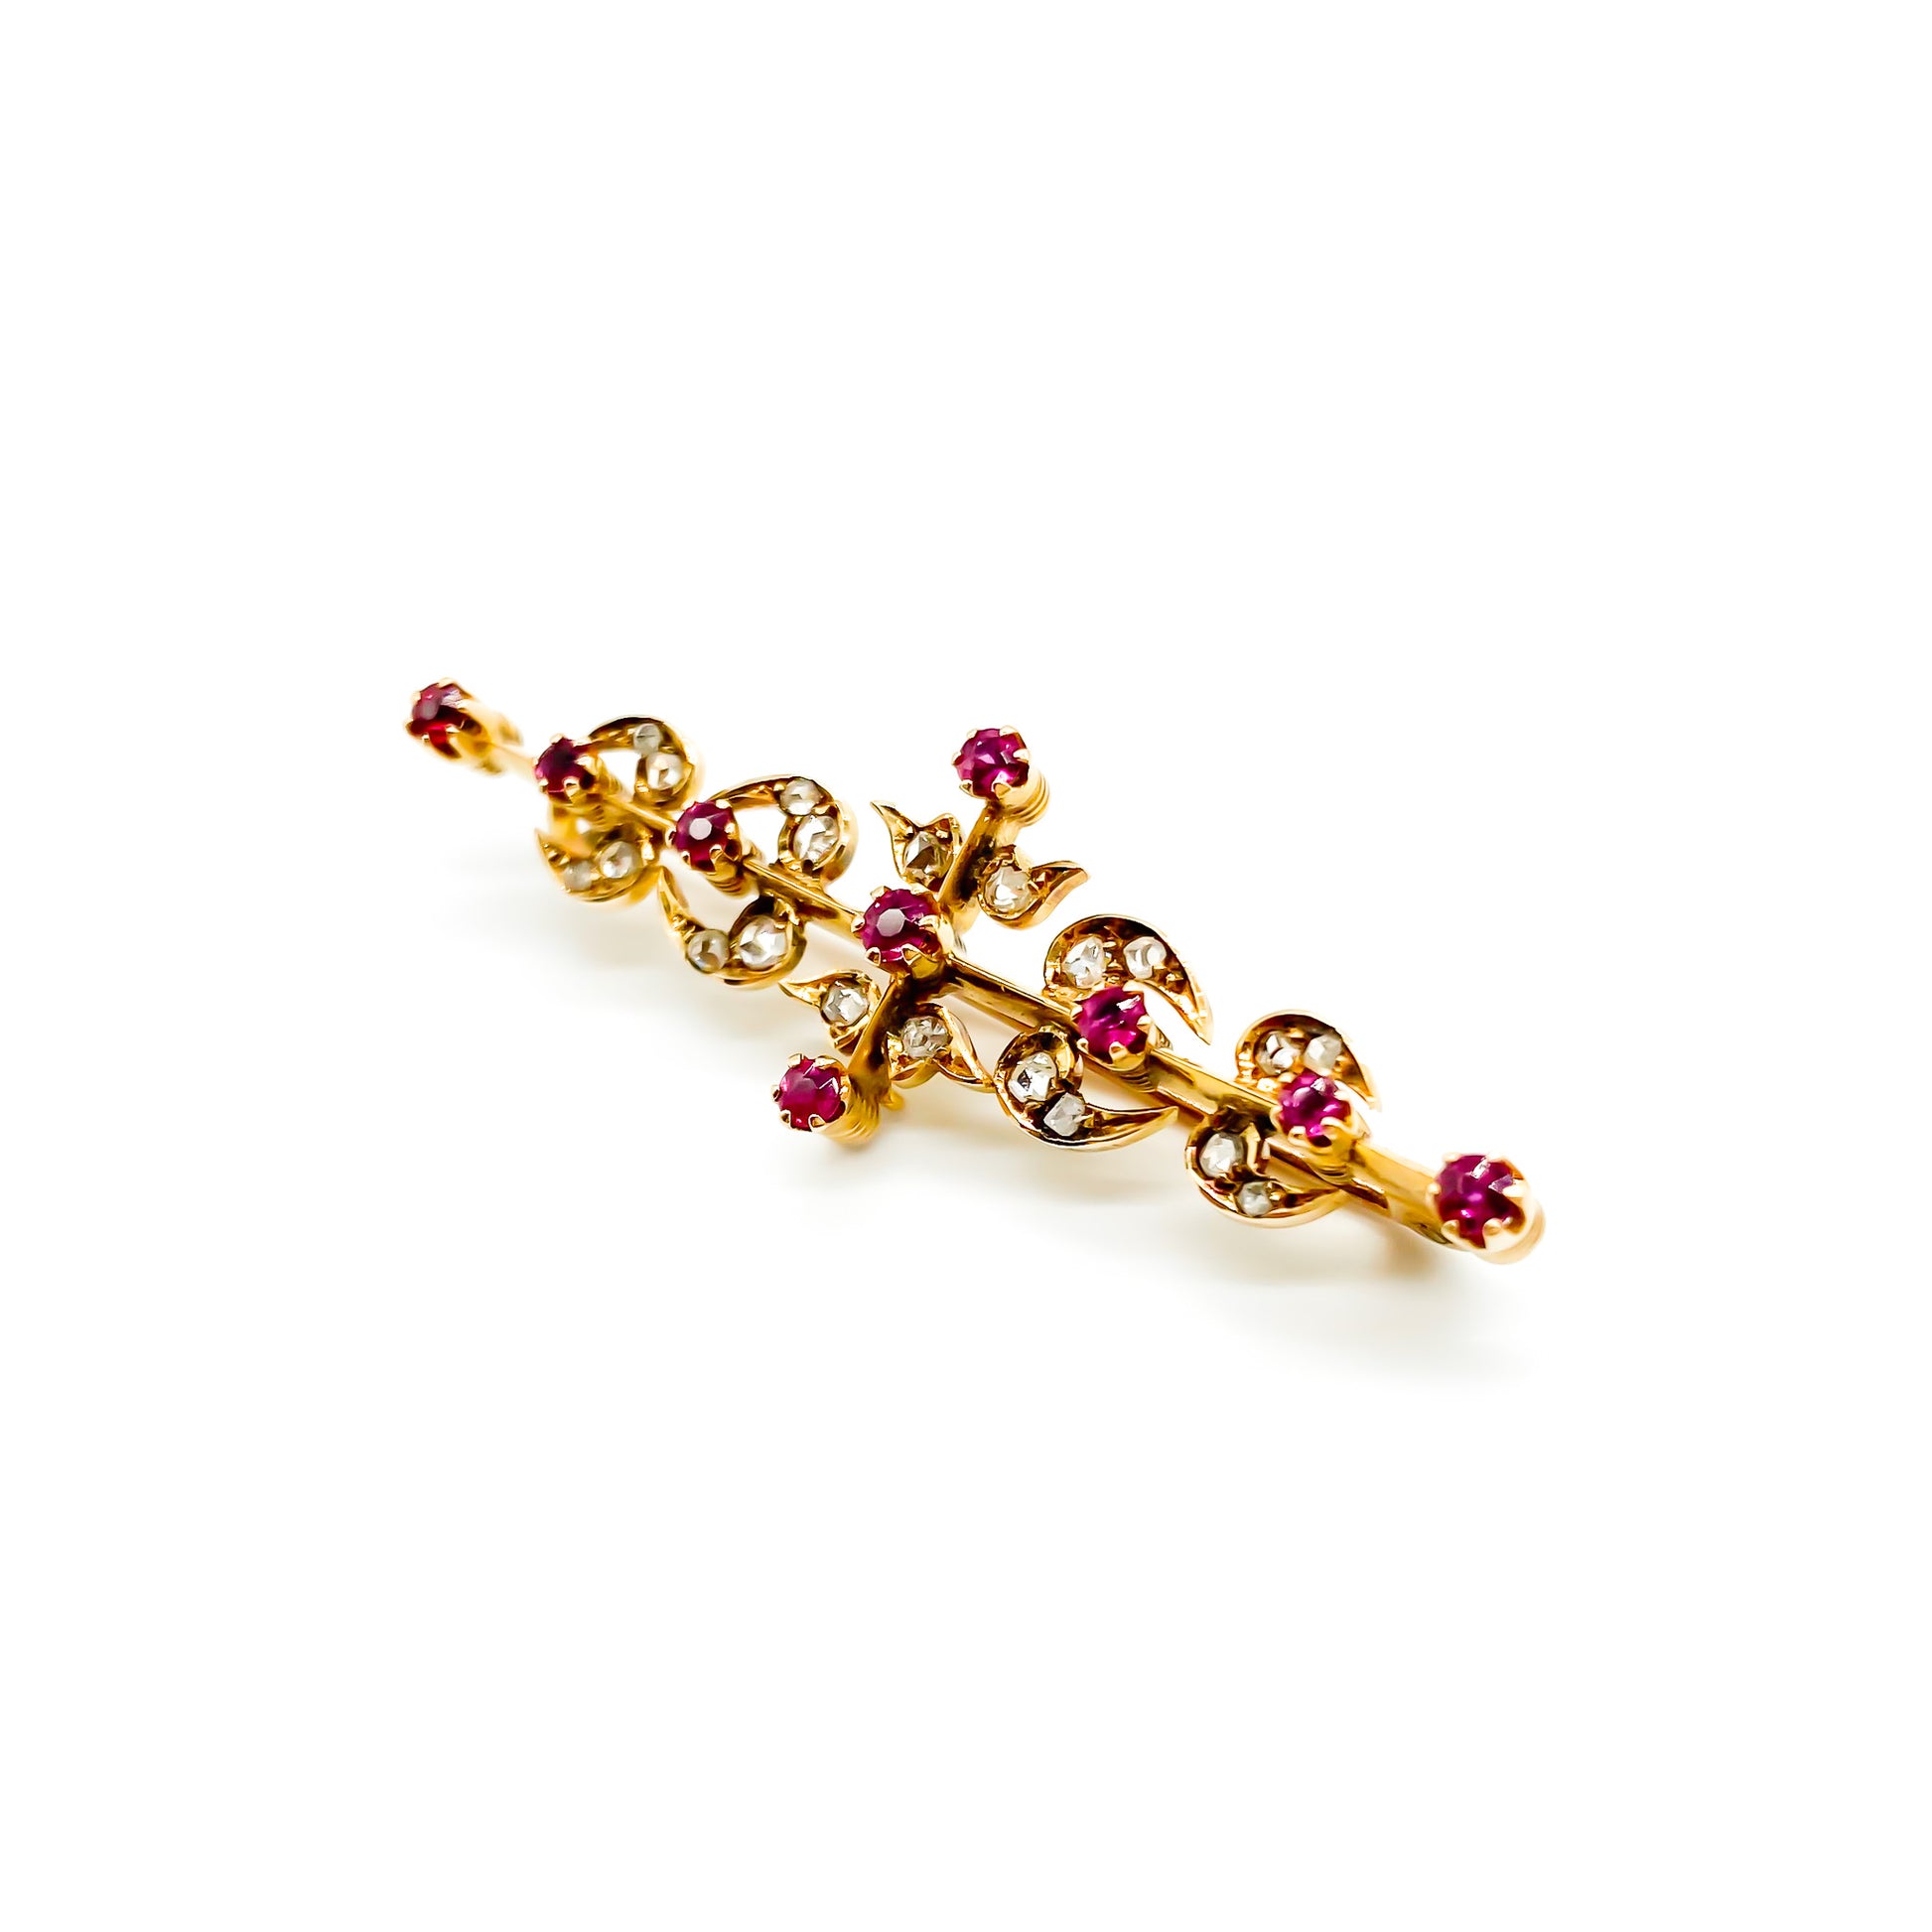 Dainty Victorian 18ct gold bar brooch set with nine rubies and twenty mine cut diamonds.